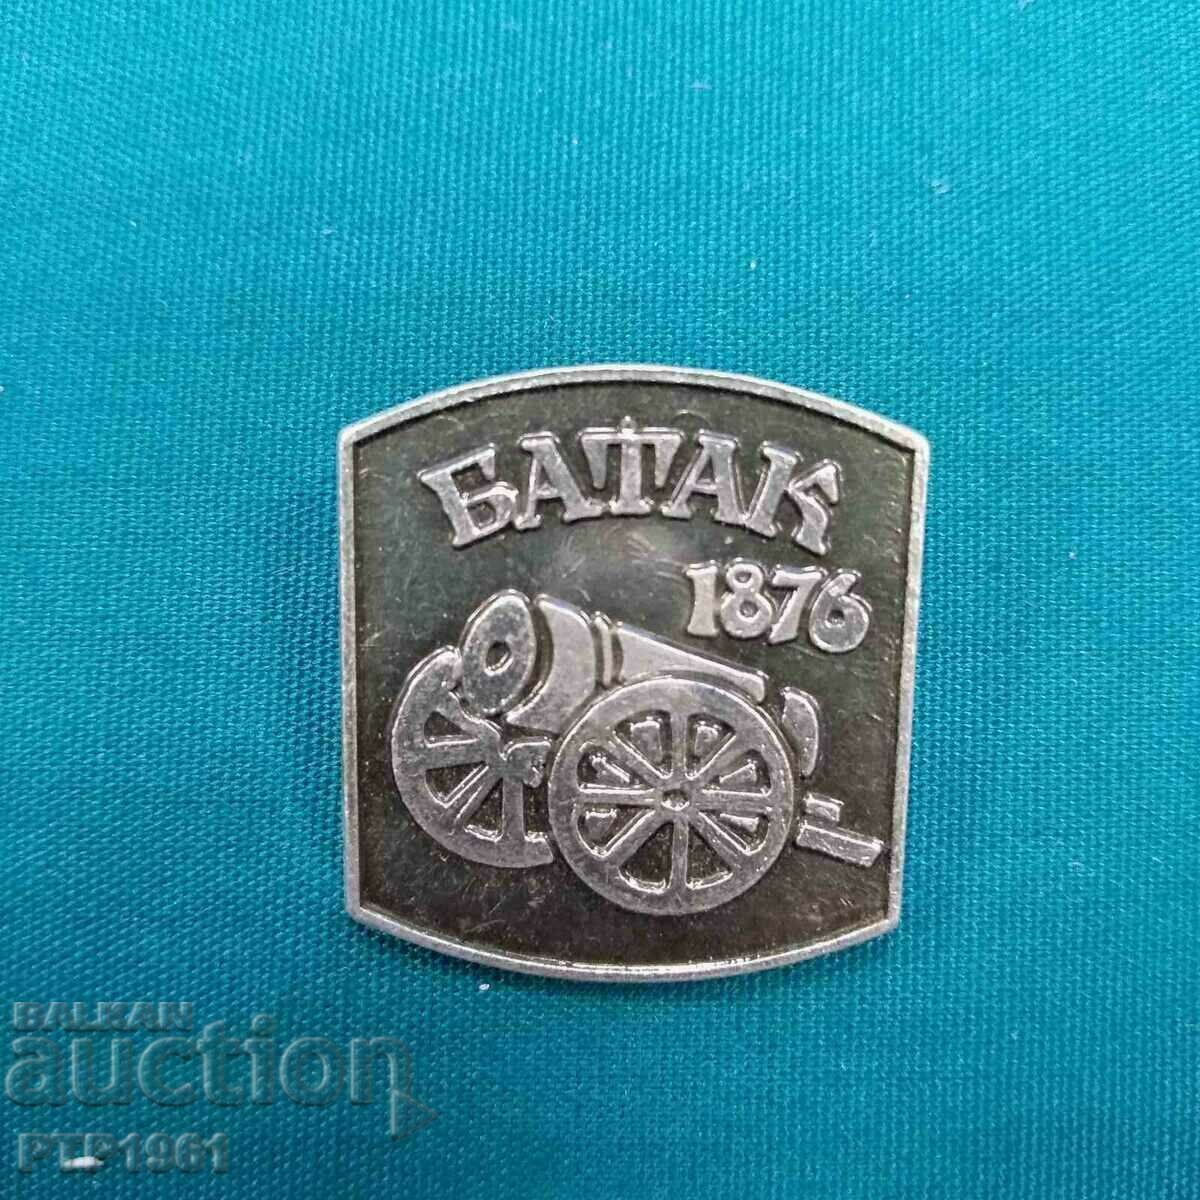 history badge